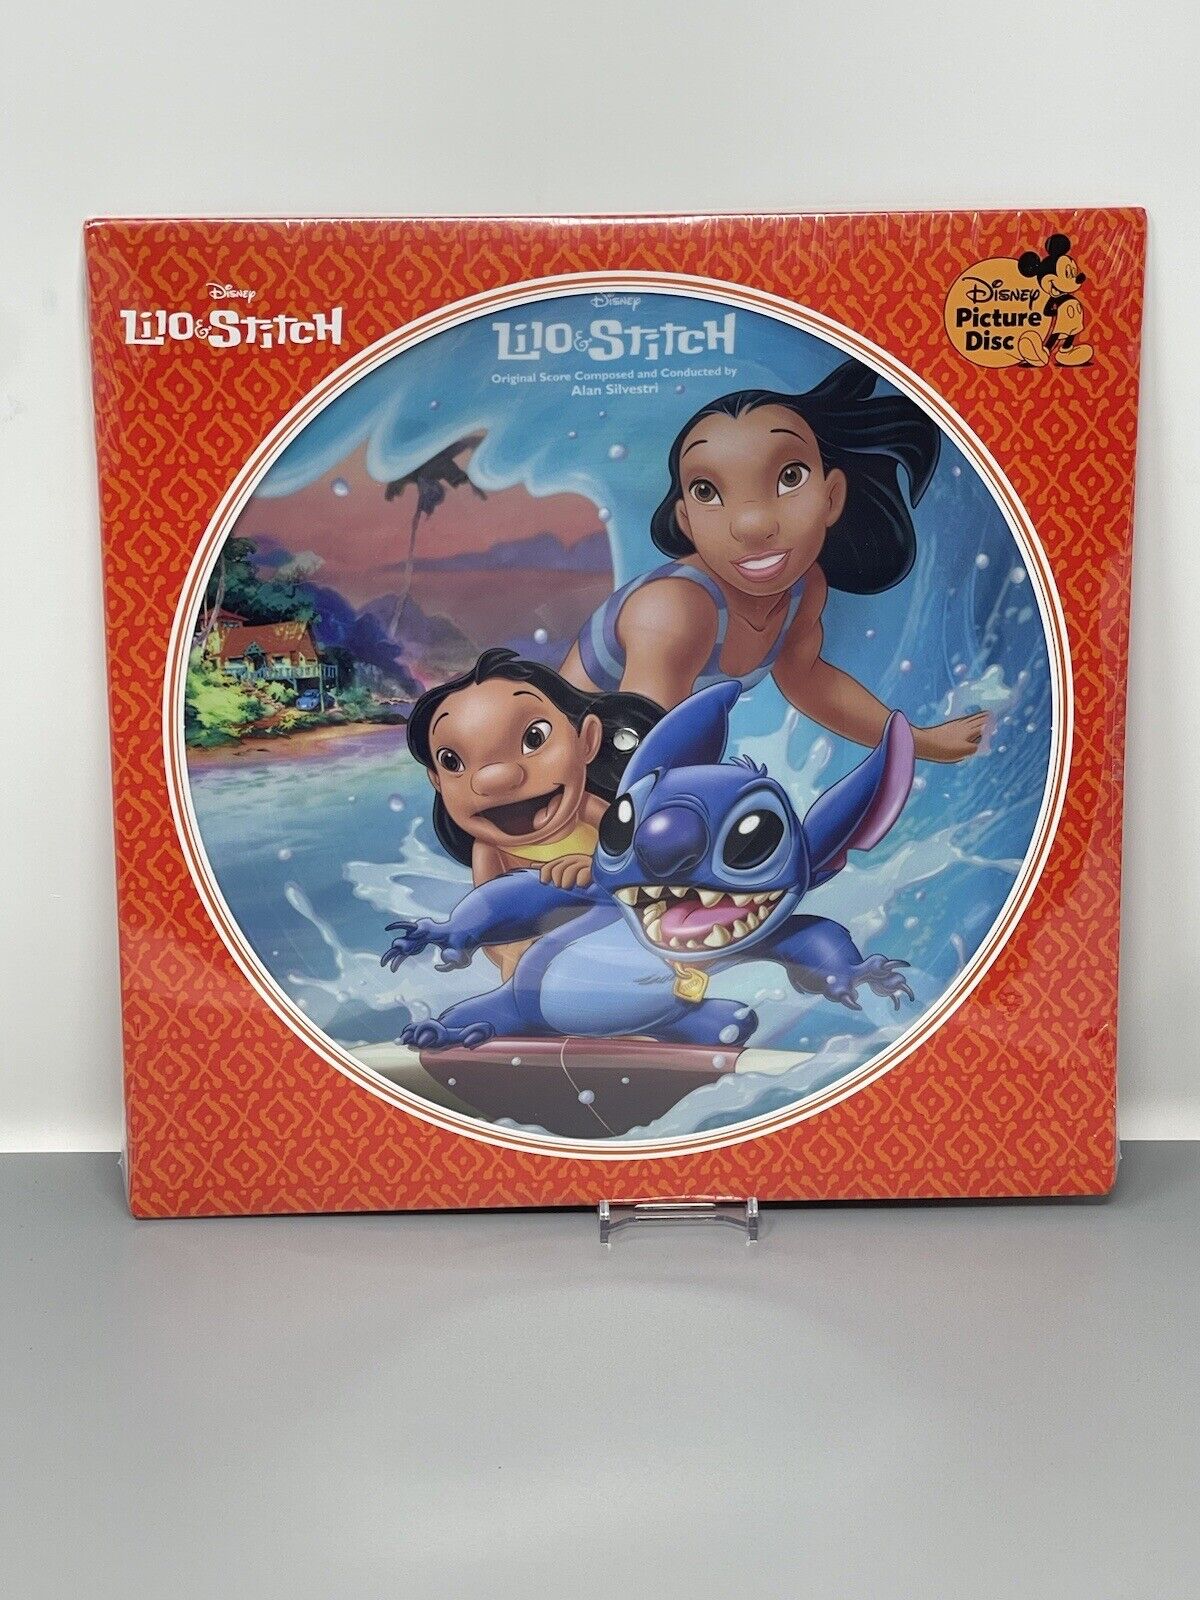 Disney's Lilo & Stitch Original Soundtrack Picture Disc Vinyl LP Record Album